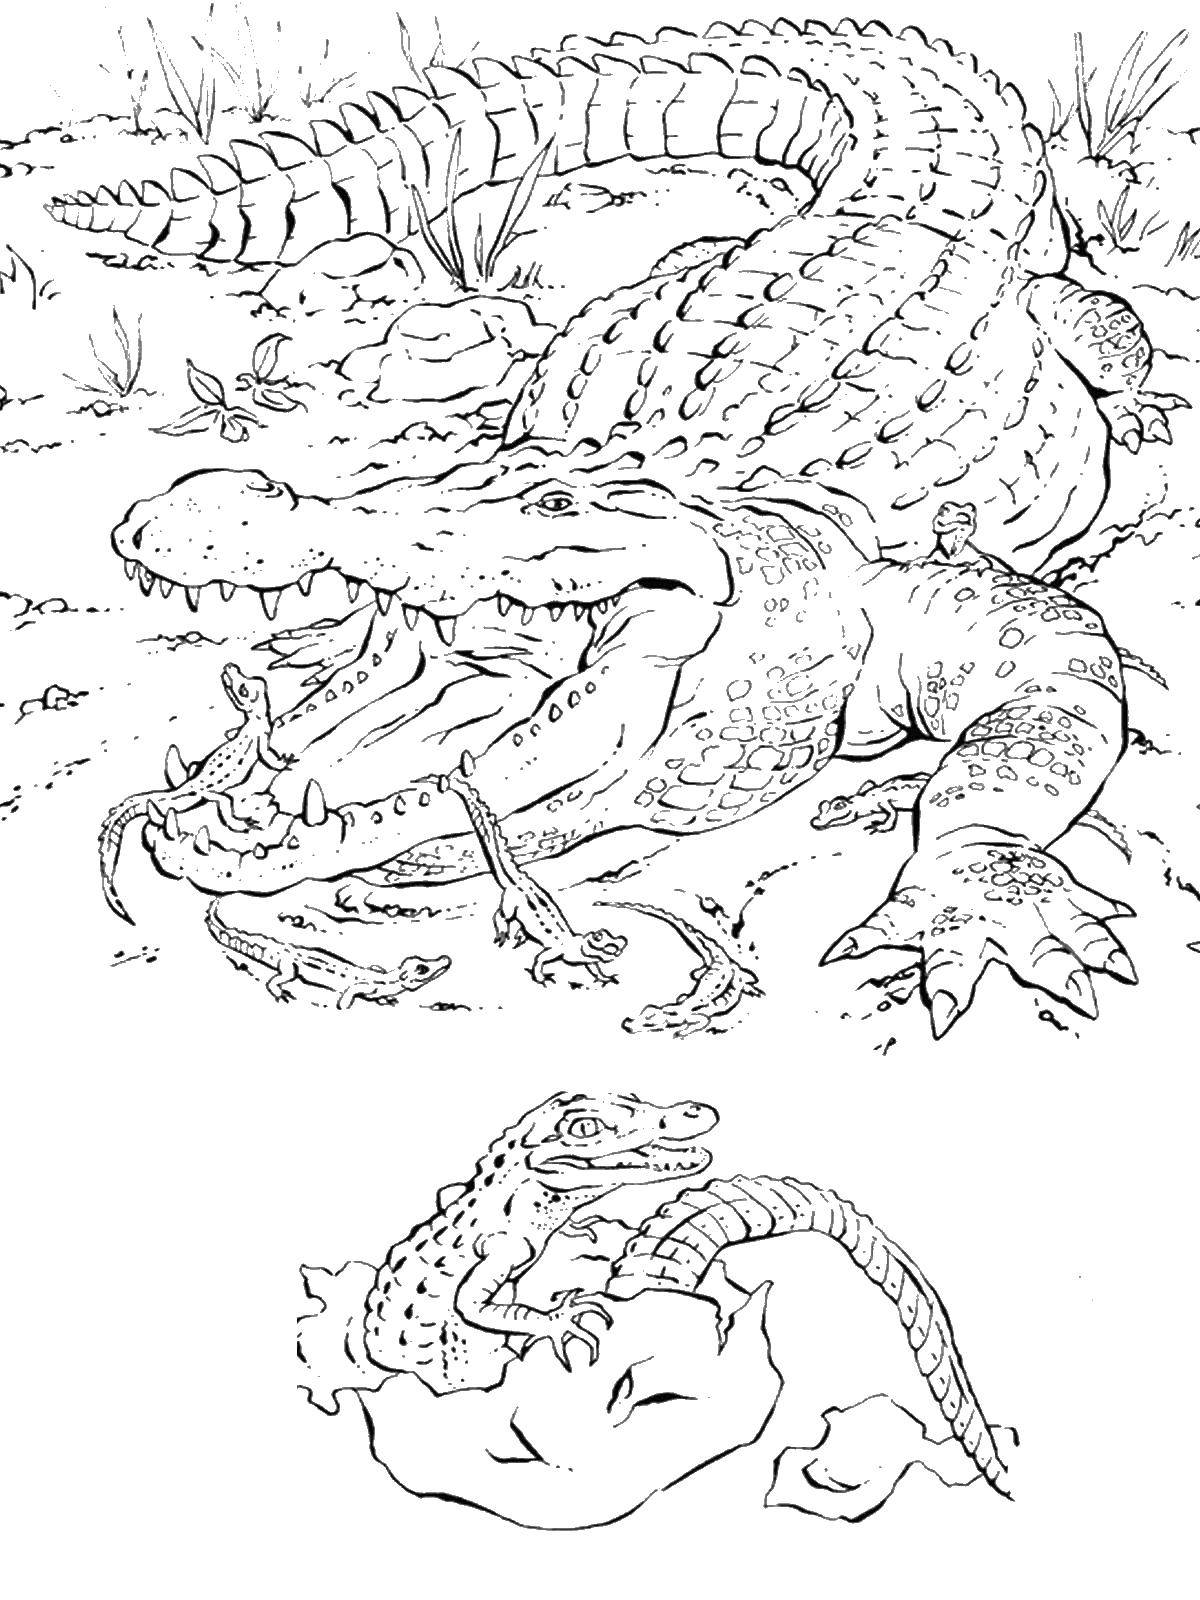 Coloring Crocodiles. Category animals. Tags:  animals, crocodile.